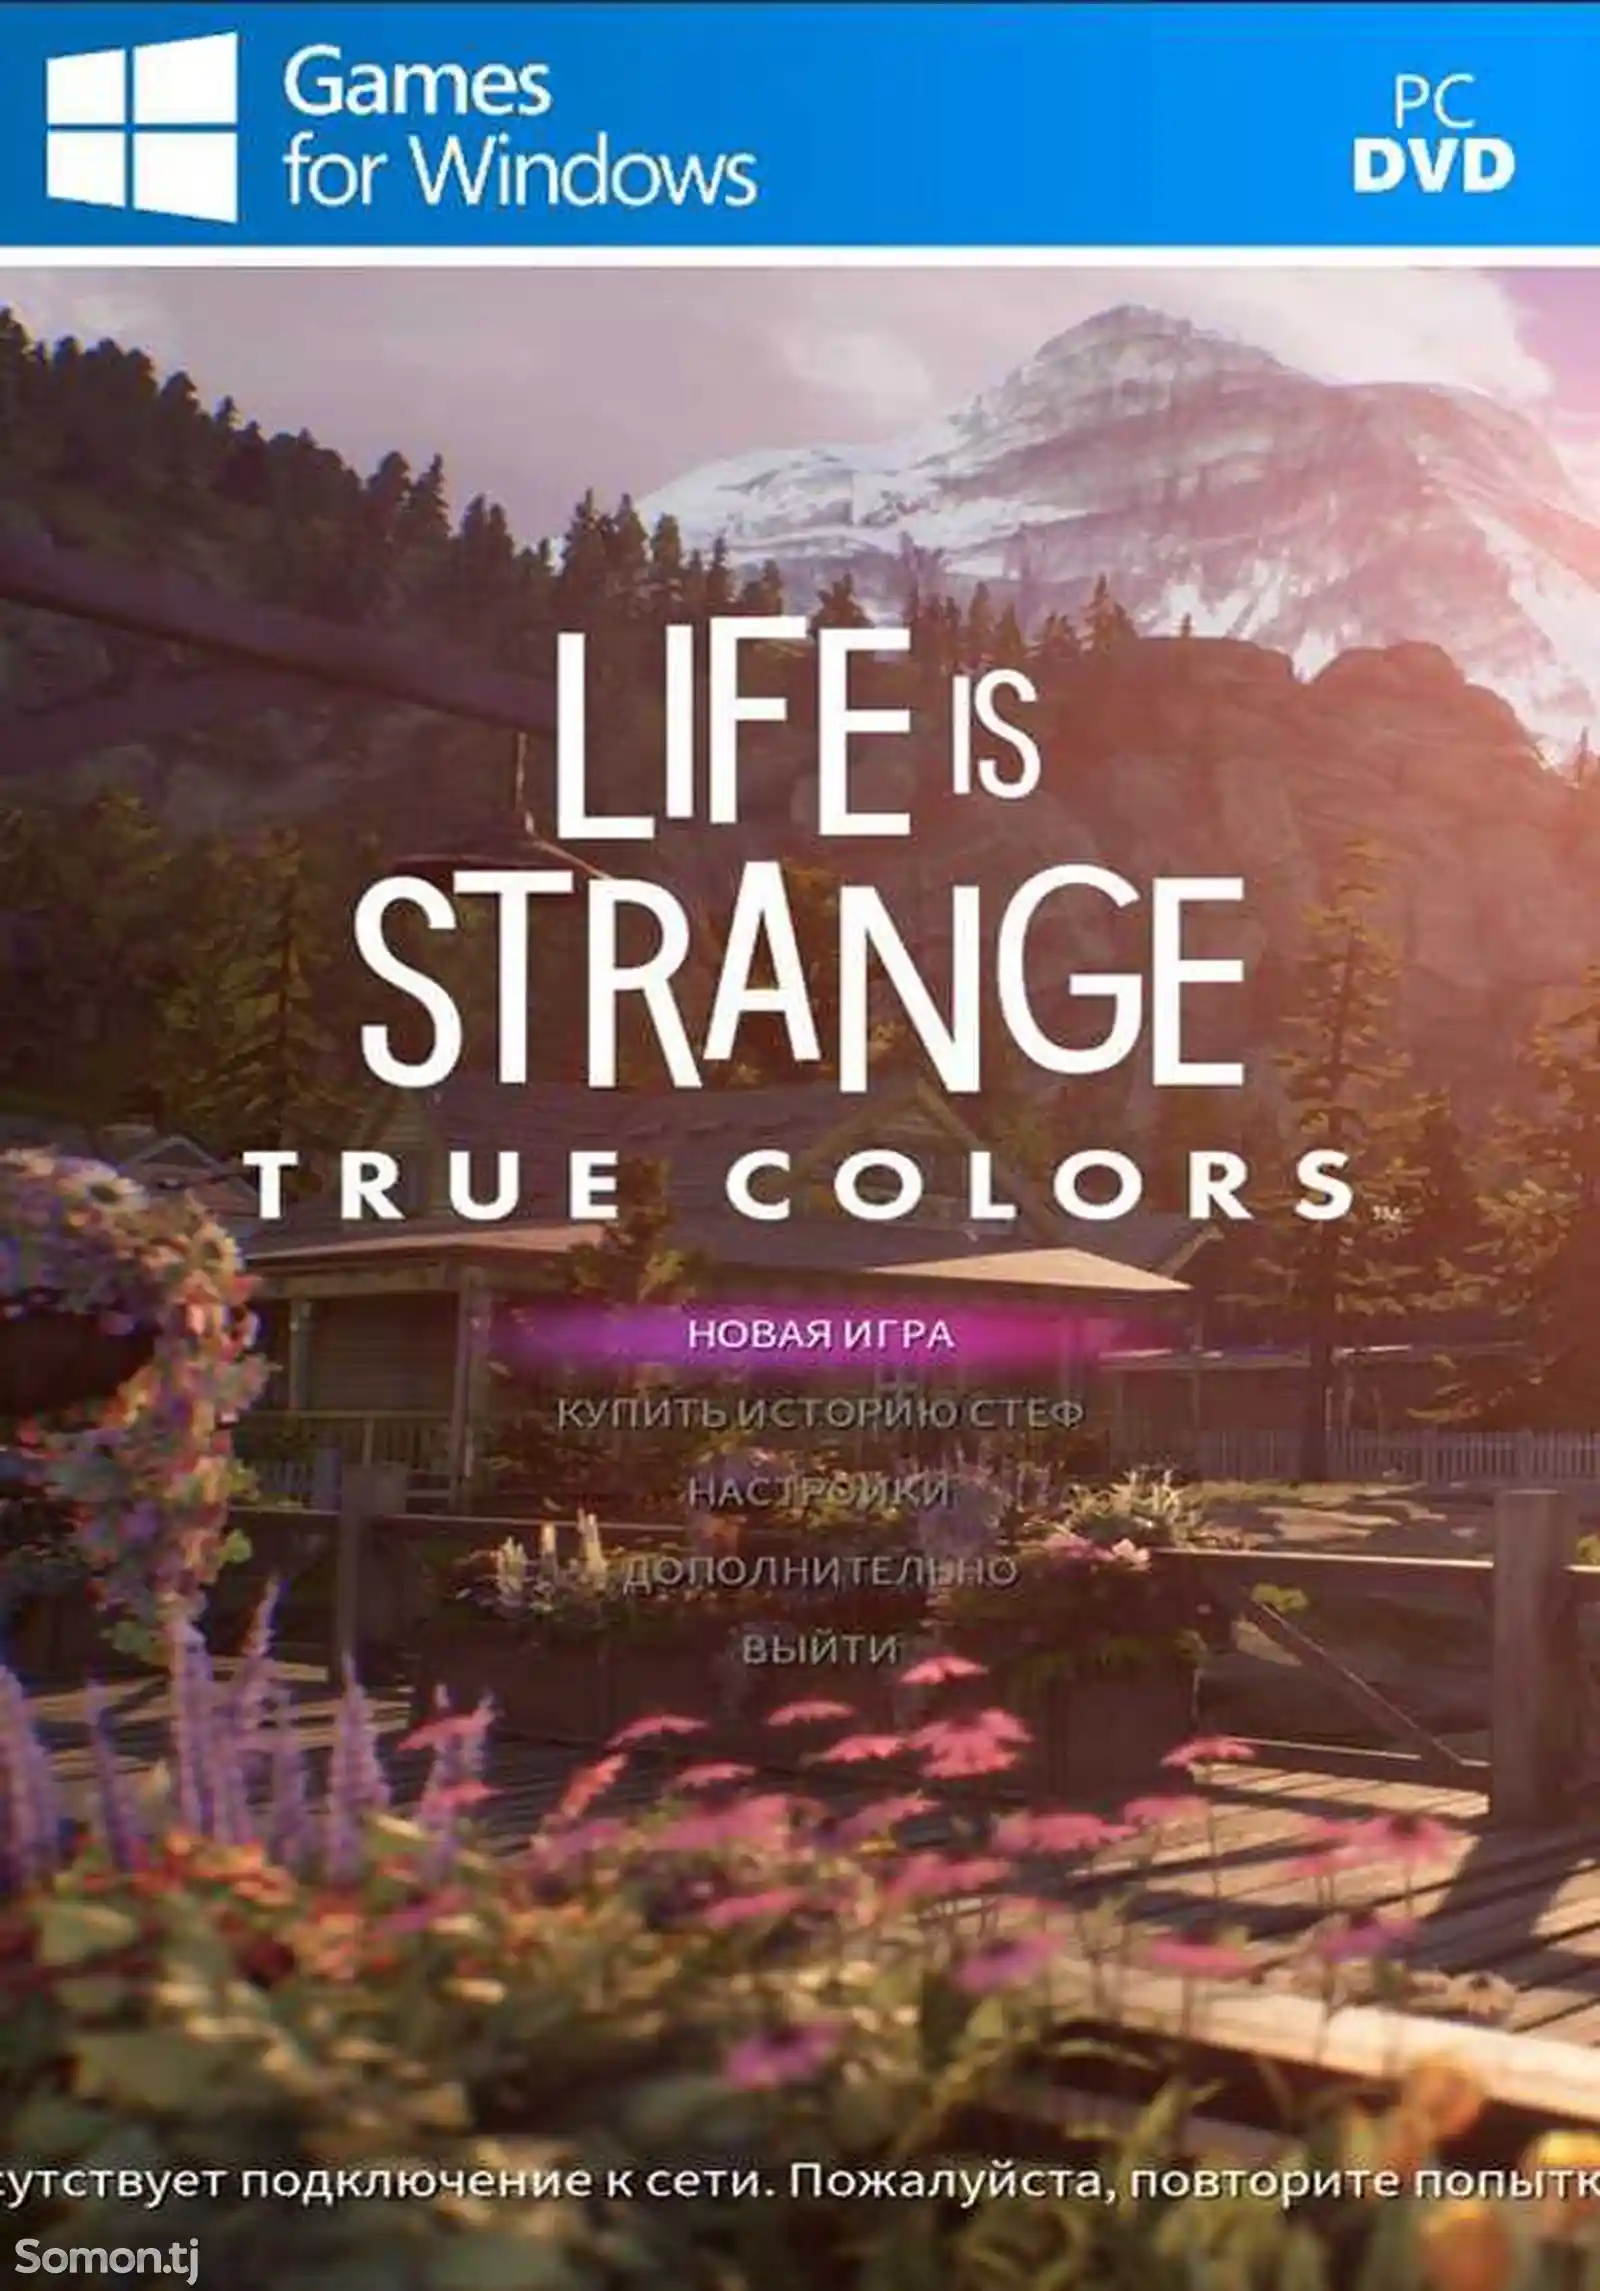 Игра Life is strange true colors для компьютера-пк-pc-1